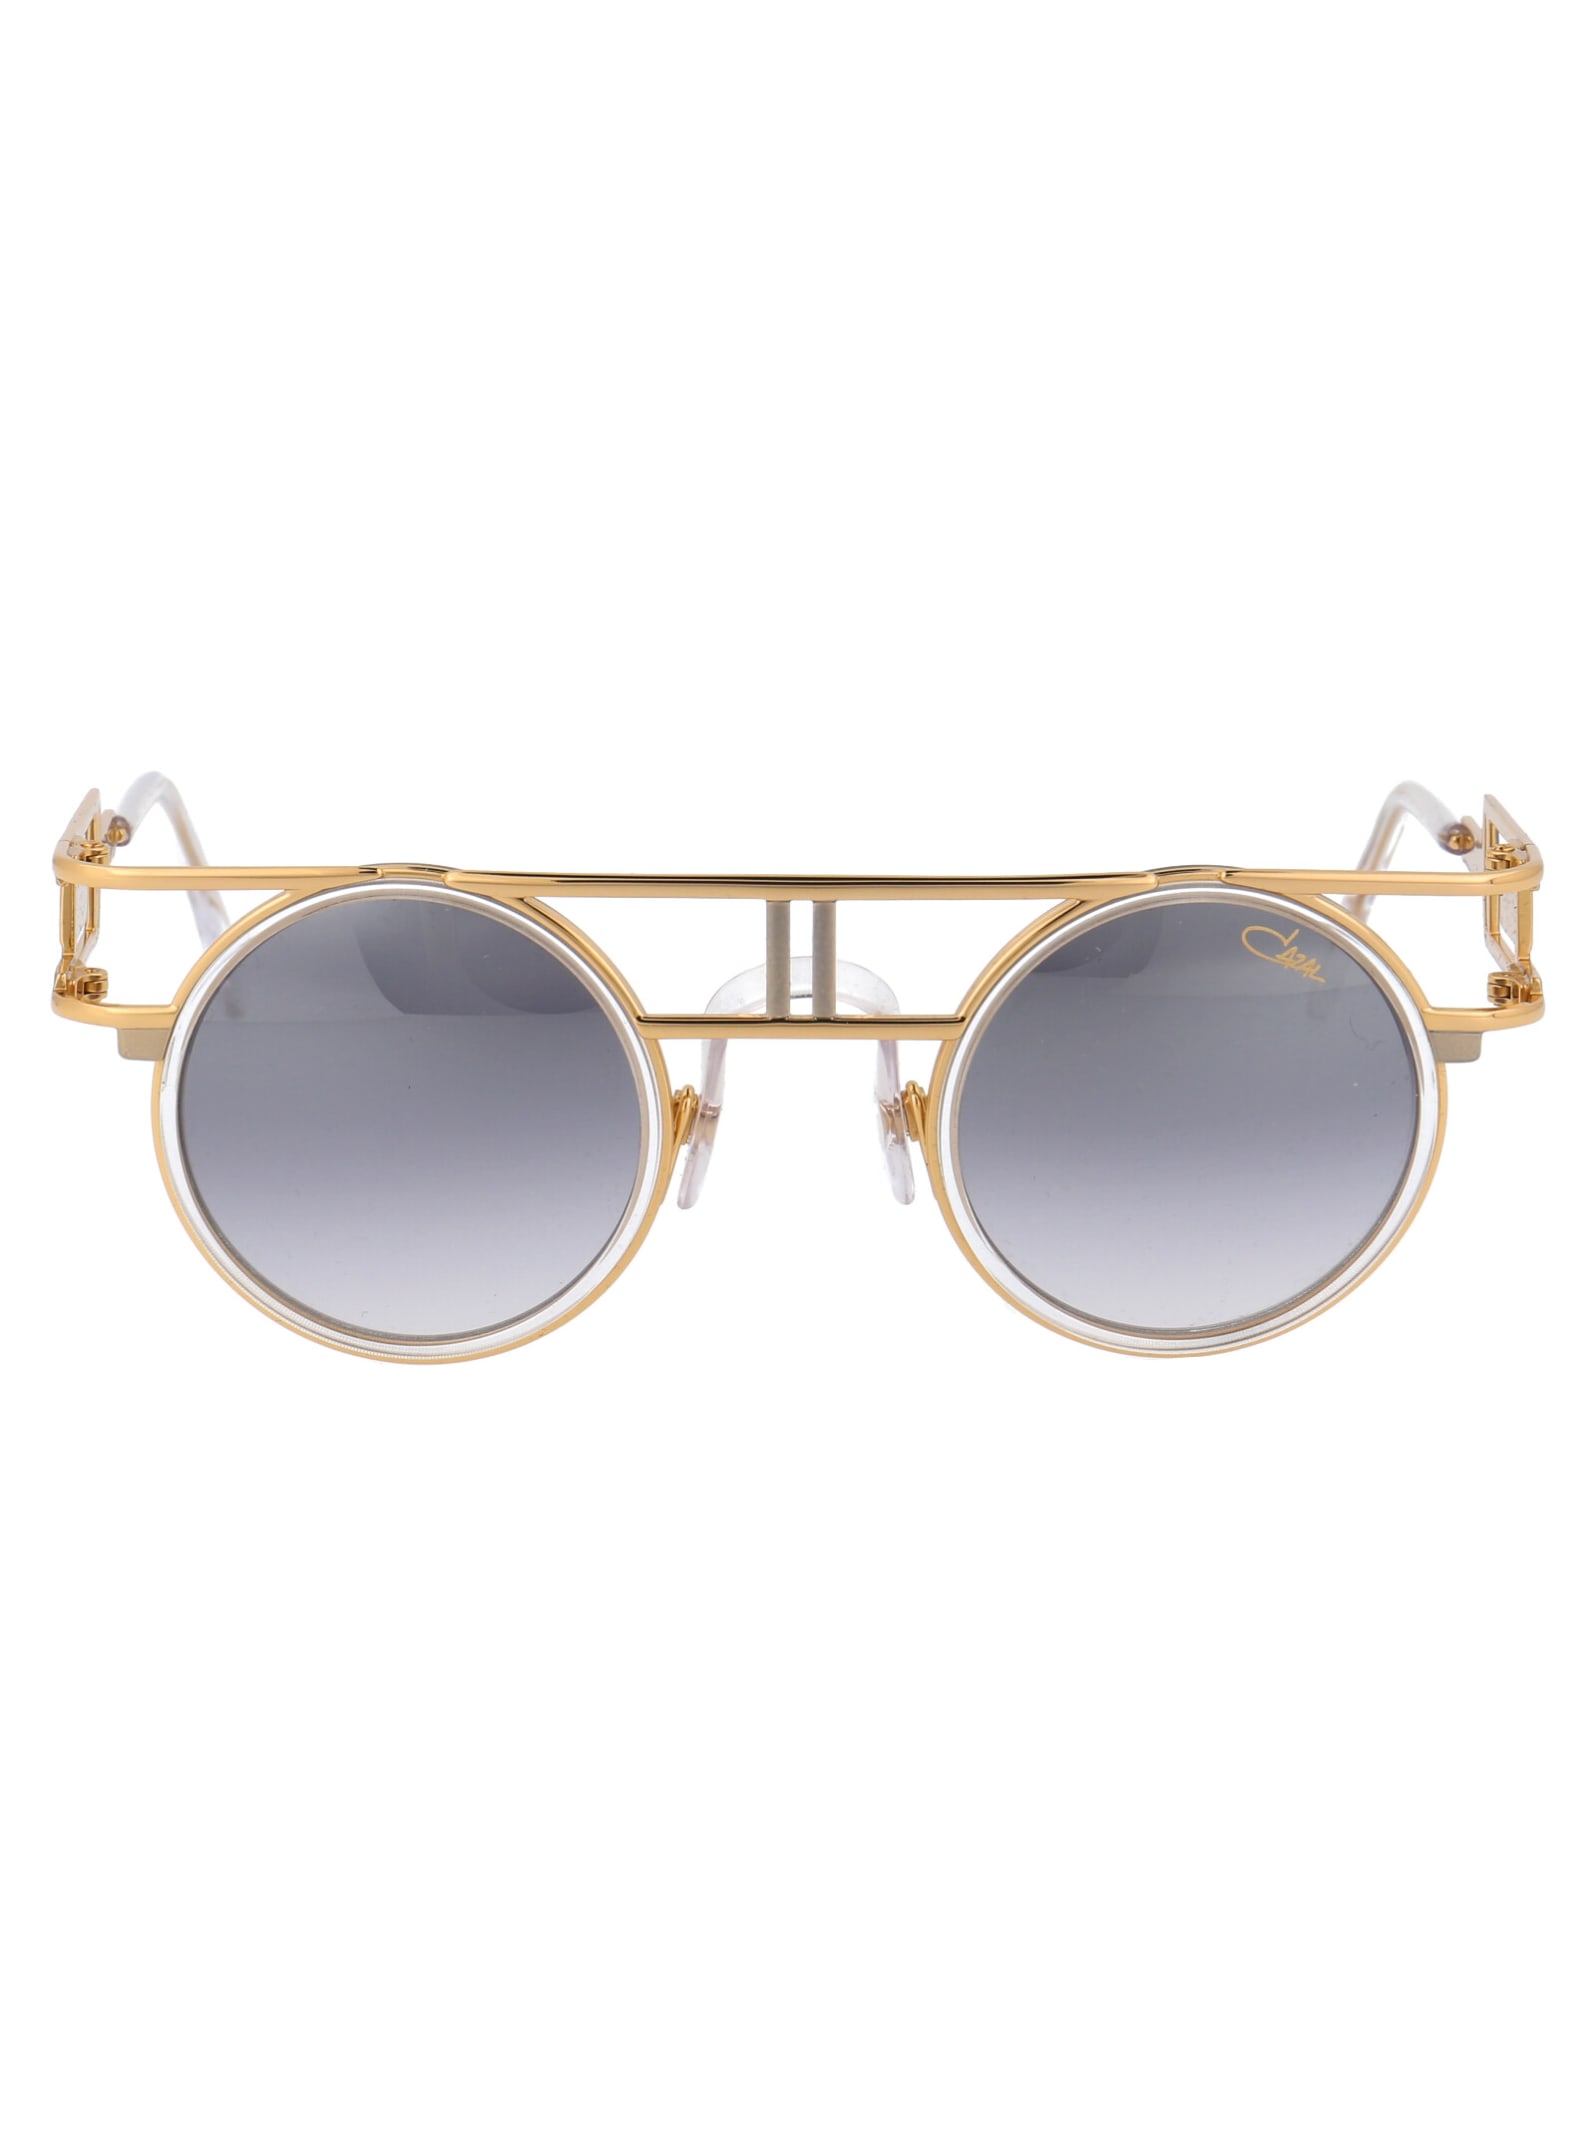 Cazal Mod. 668/3 Sunglasses